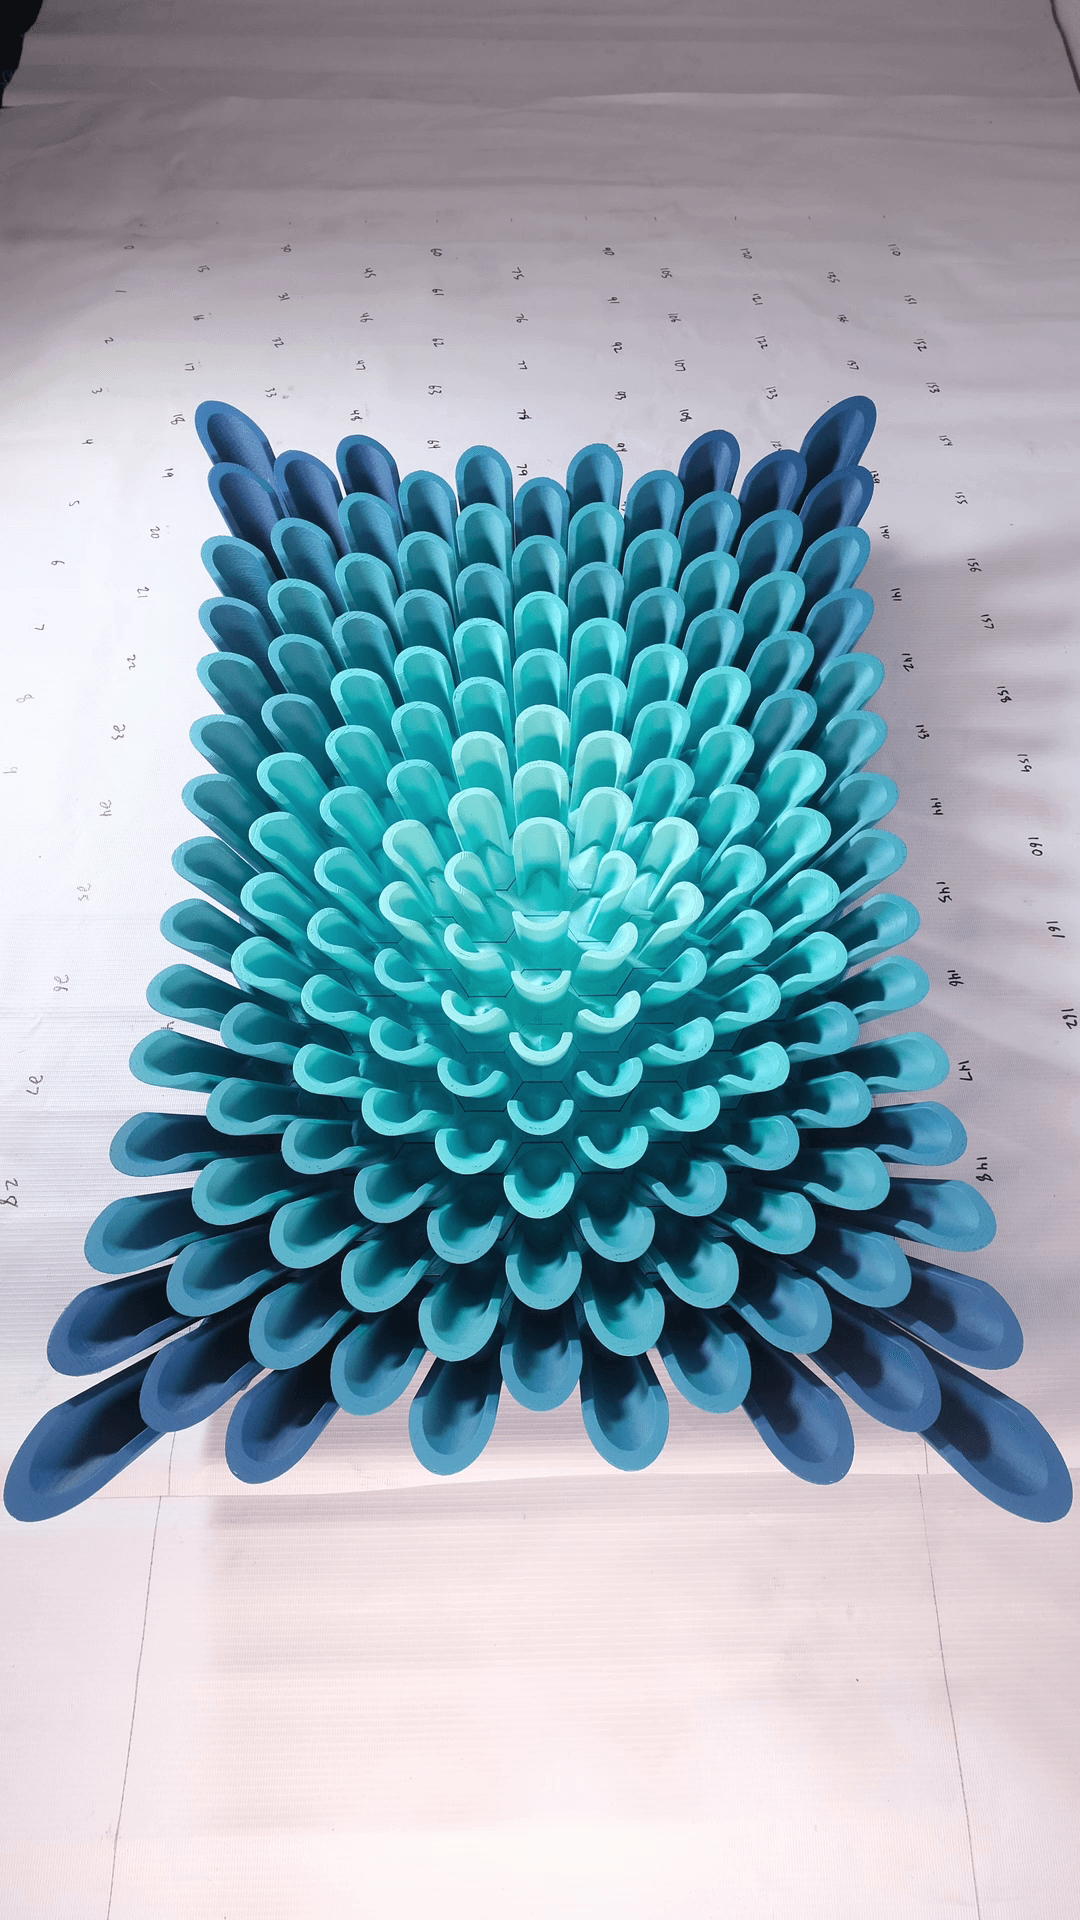 Splashy Burst | Herschel Shapiro | Organic Geometric Sculptures